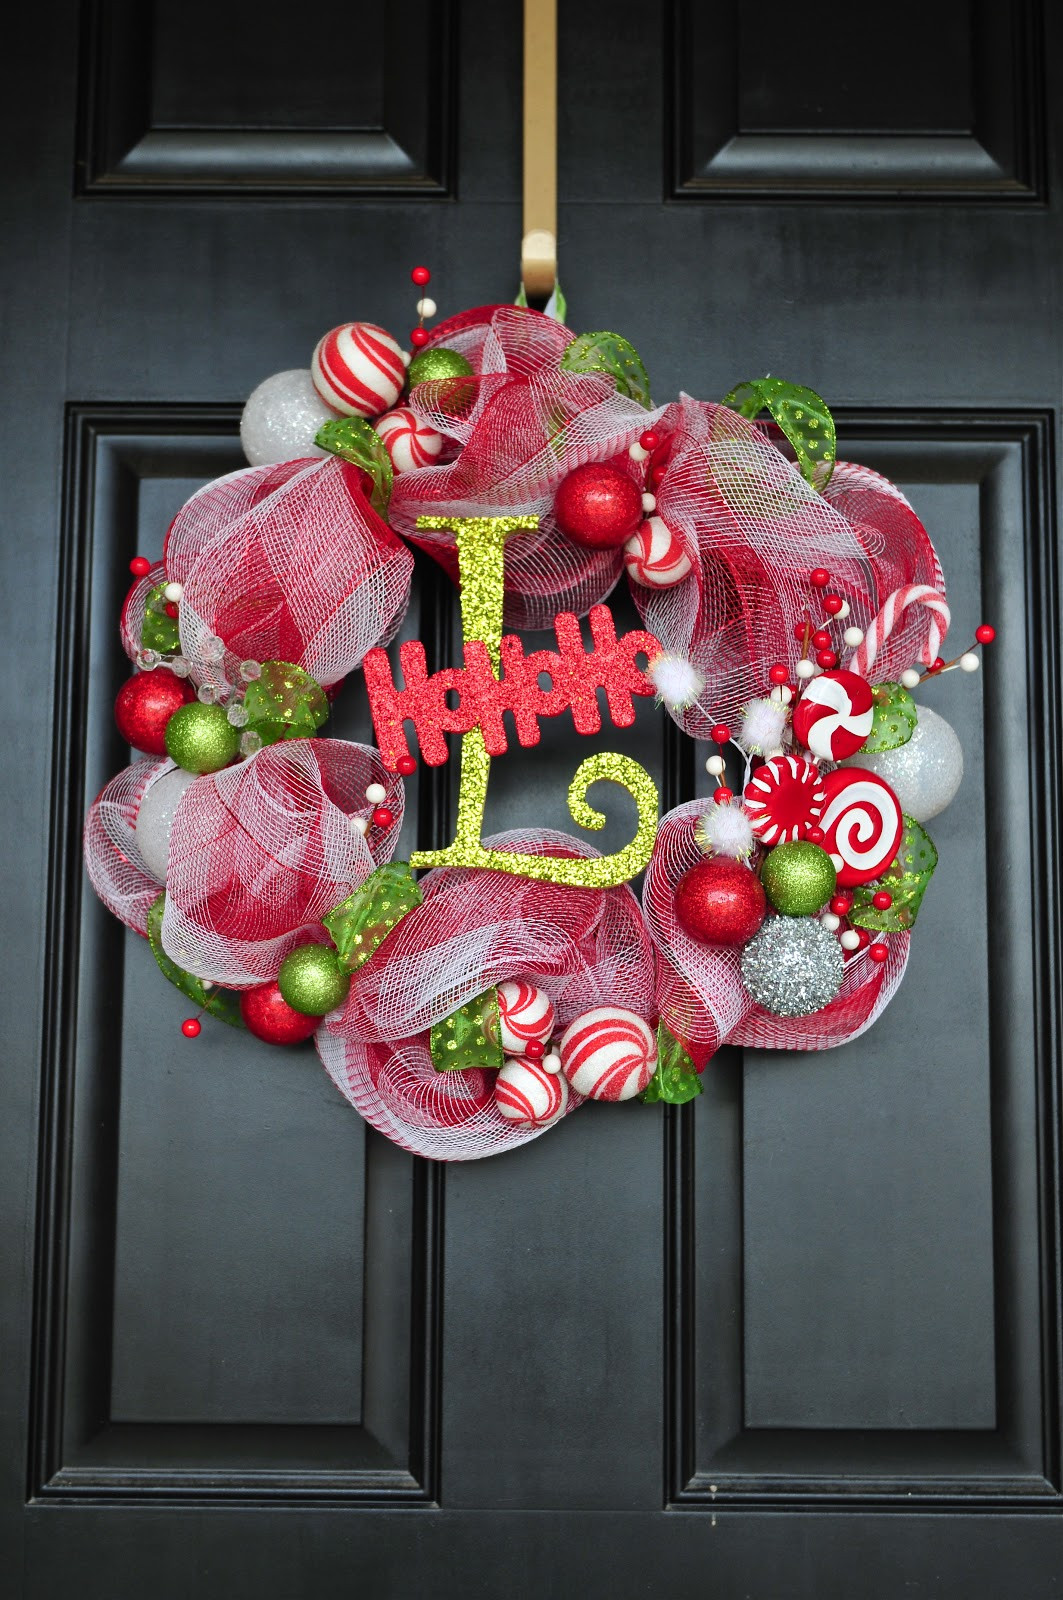 Best ideas about DIY Mesh Christmas Wreath
. Save or Pin DIY Til We Die Easy Christmas mesh wreaths Now.